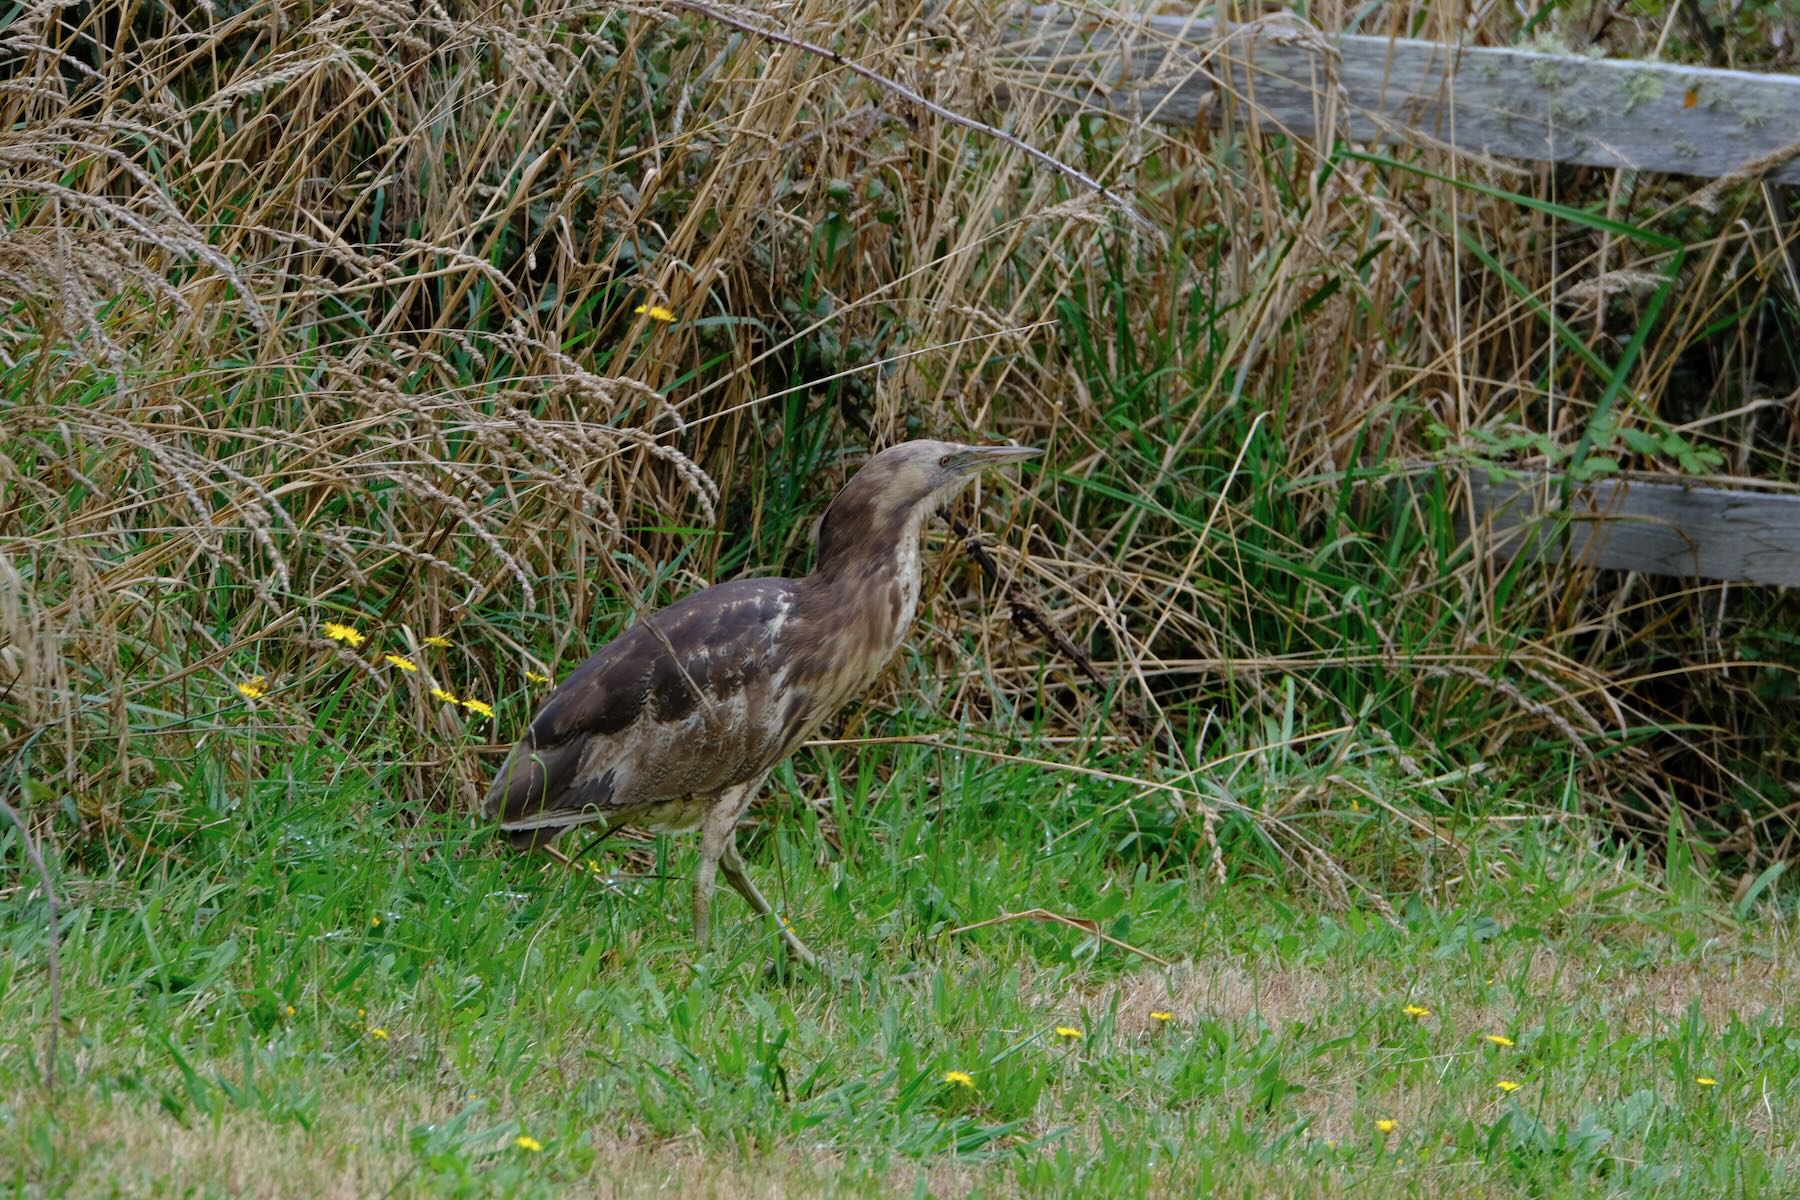 Brown stripy bird at the edge of long grass. 